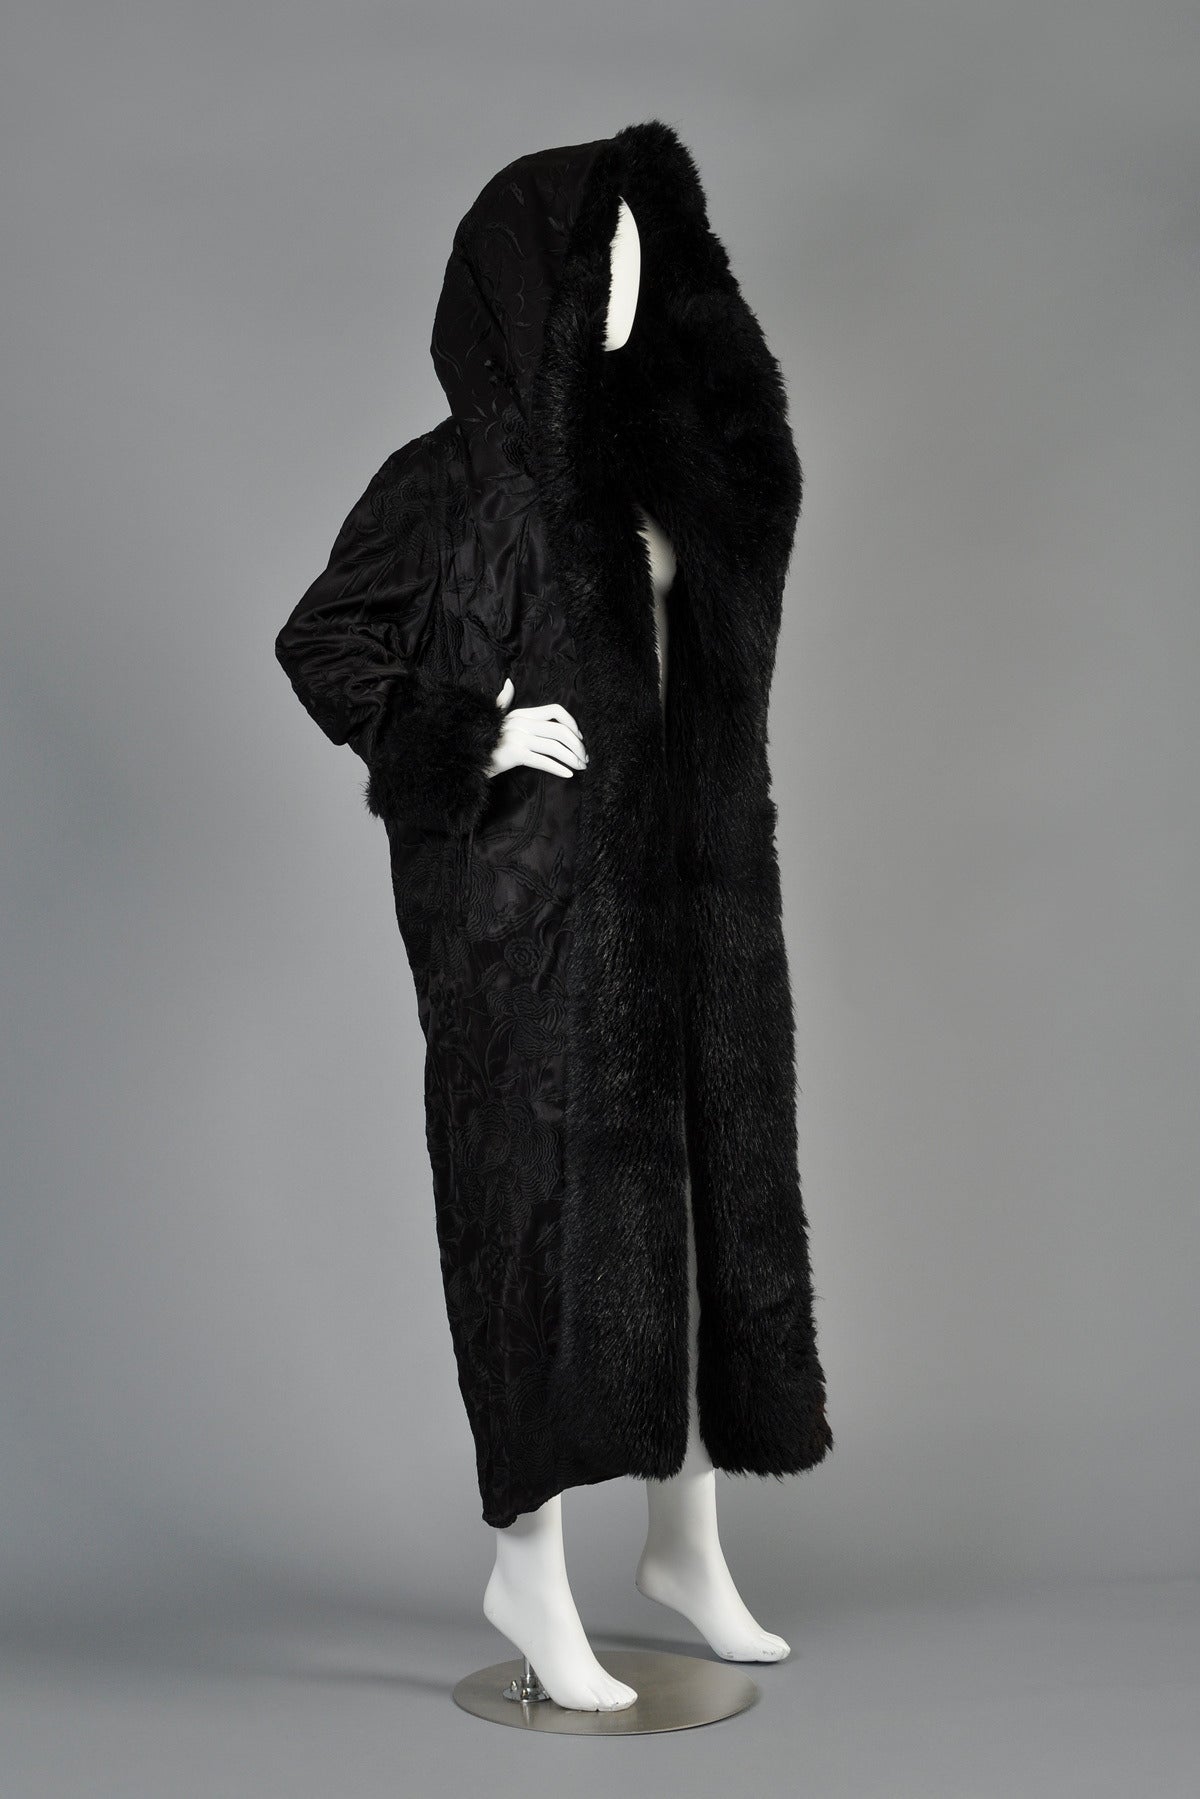 Women's Norma Kamali Embroidered Satin Coat with MASSIVE Fur-lined Hood